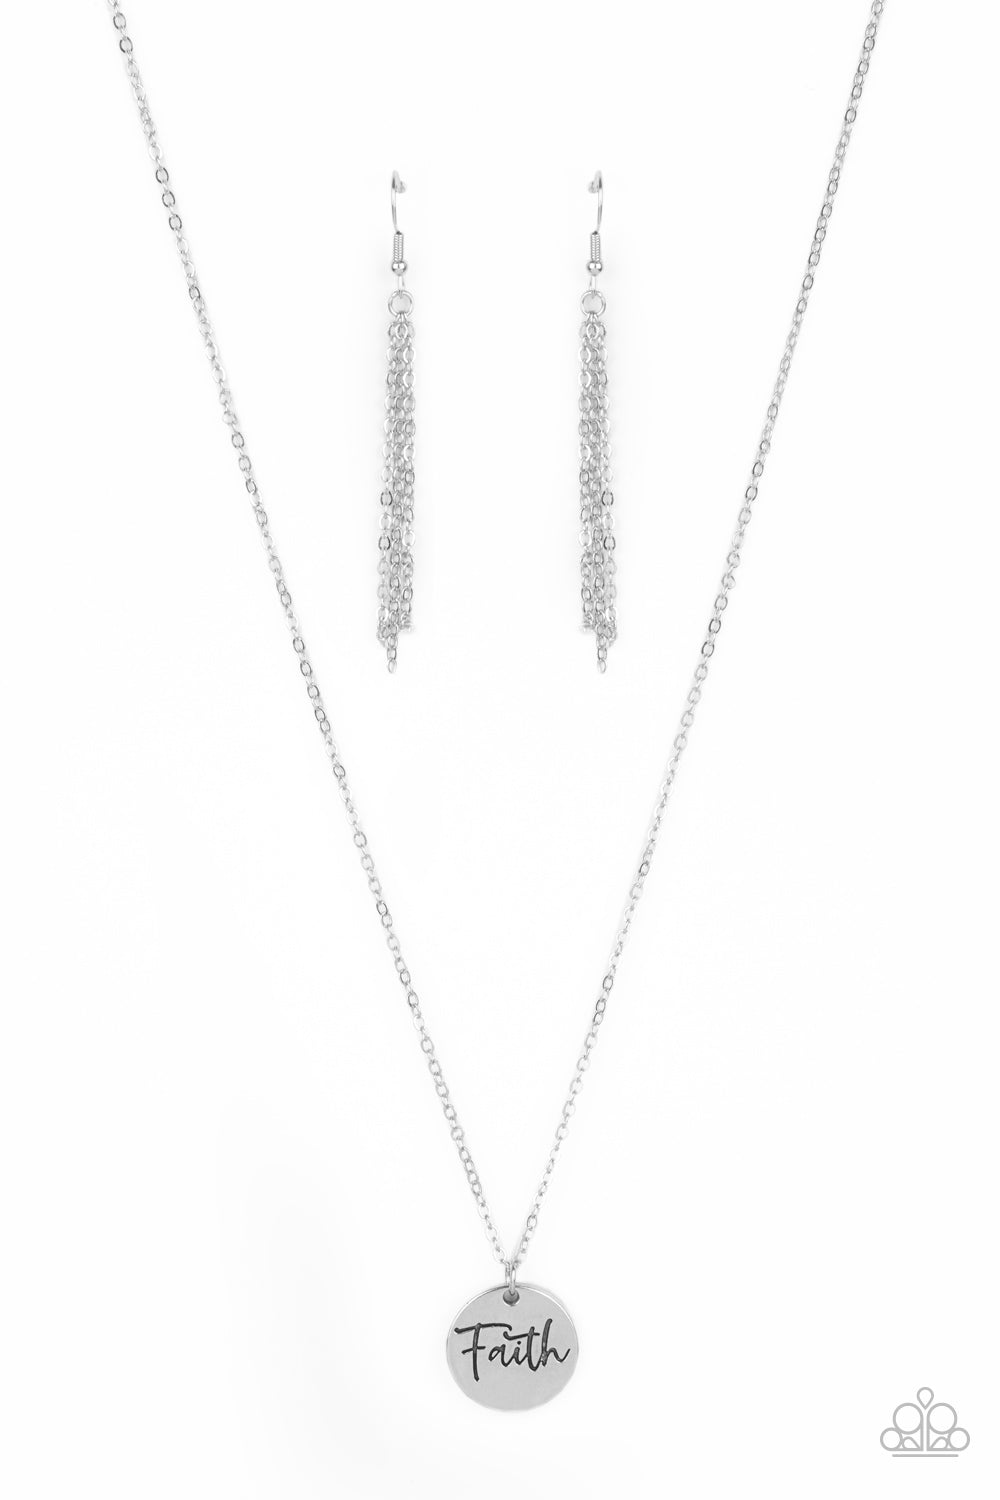 Paparazzi Accessories - Choose Faith #N743 Box 8 - Silver Necklace